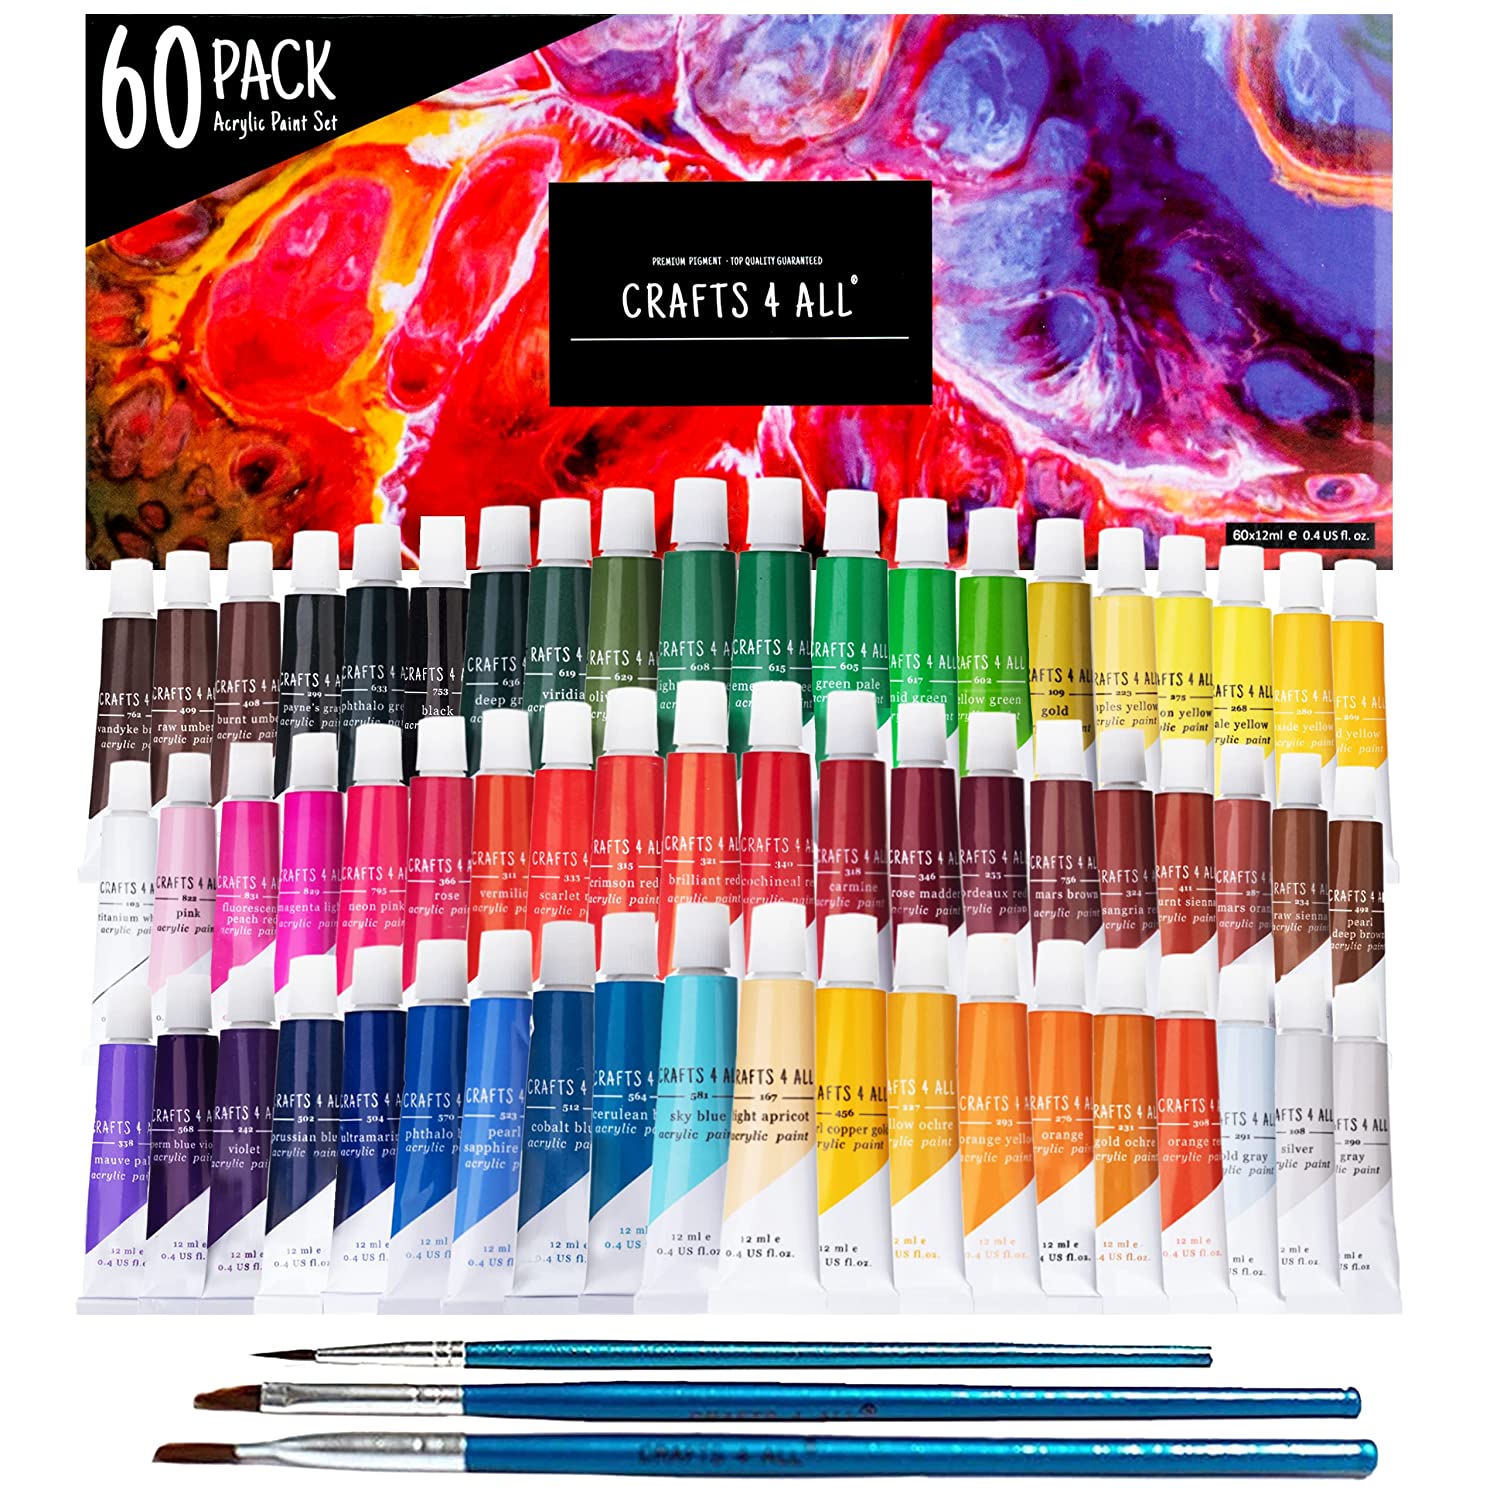 FABER-CASTELL Acrylic Paint Tube Set - Pack of 12 Shades 9ml  tubes - Acrylic colours